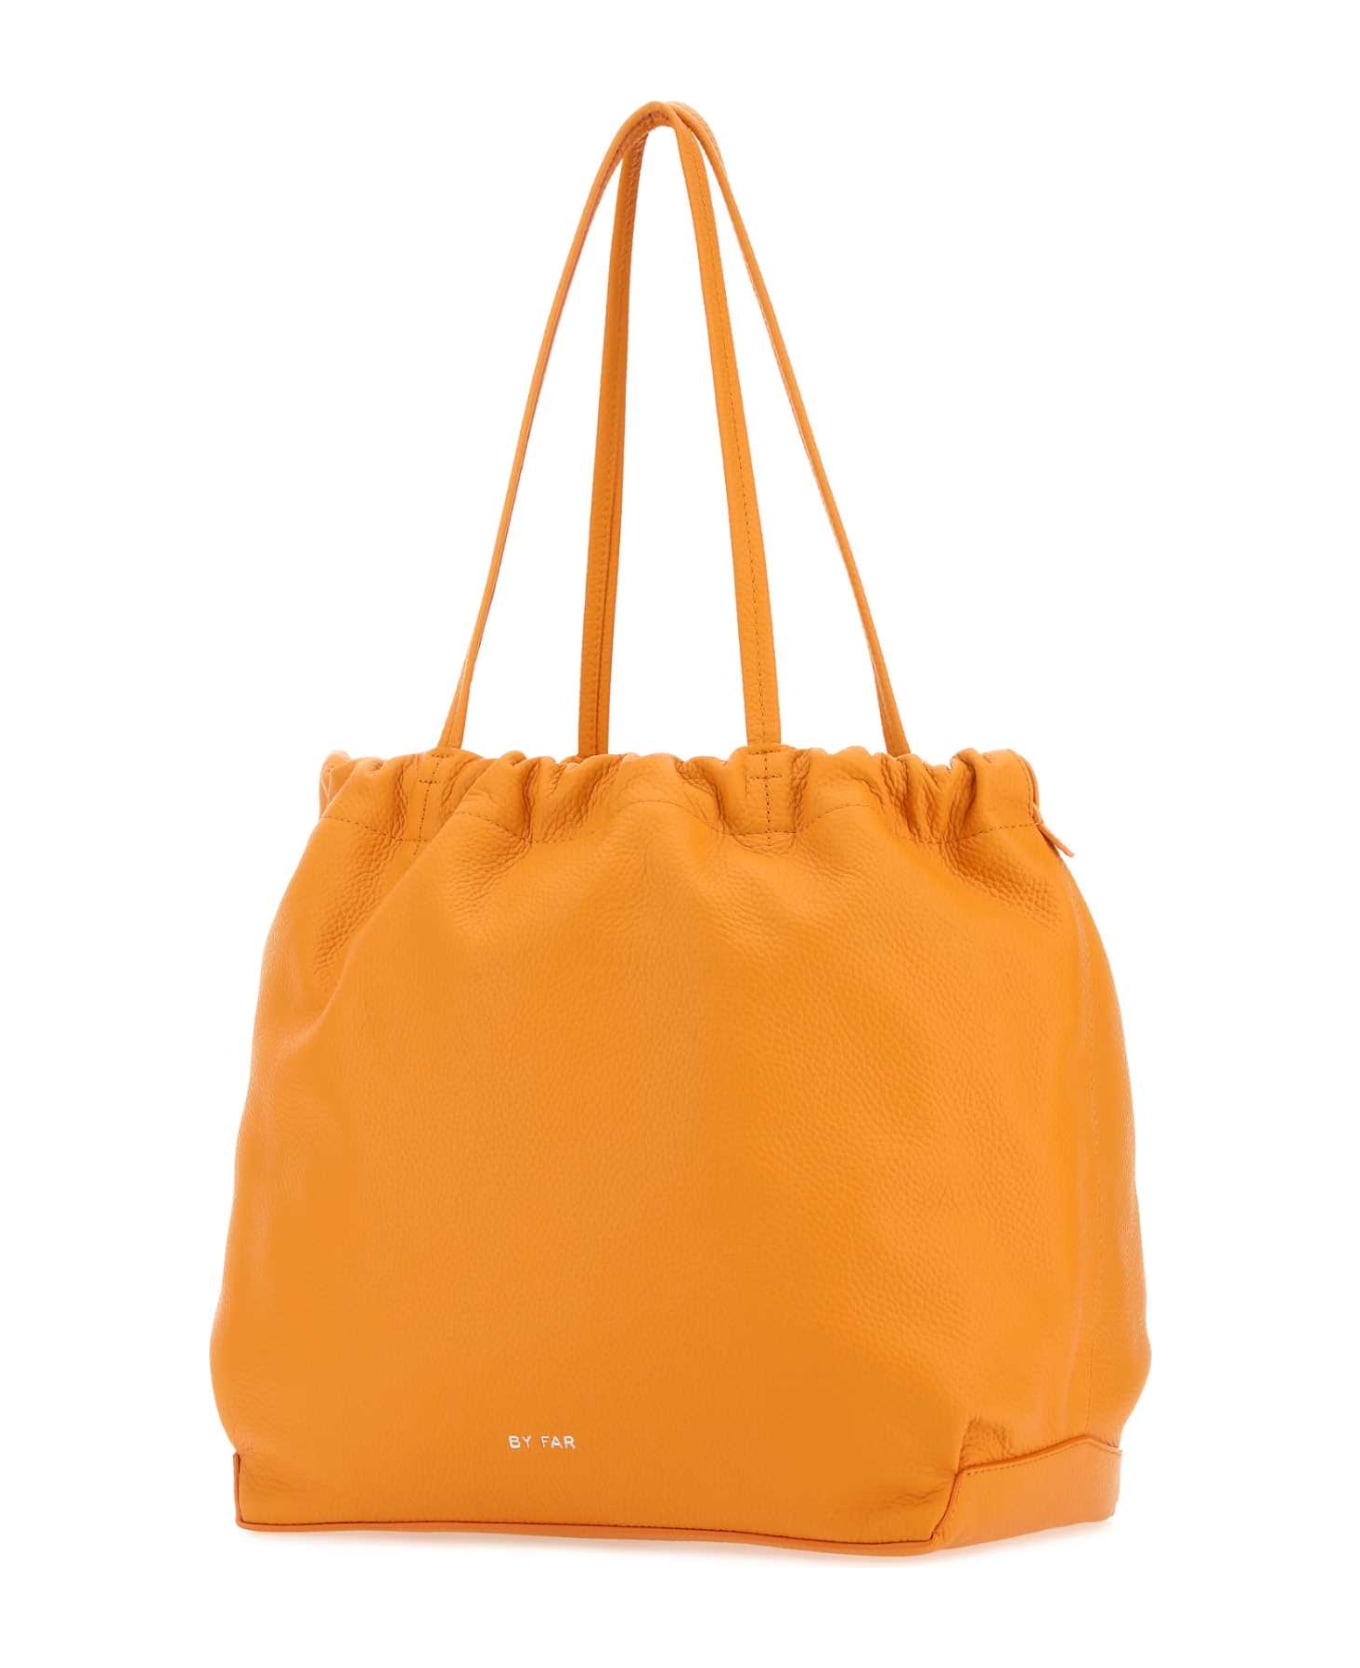 BY FAR Orange Nappa Leather Oslo Shopping Bag - Orange